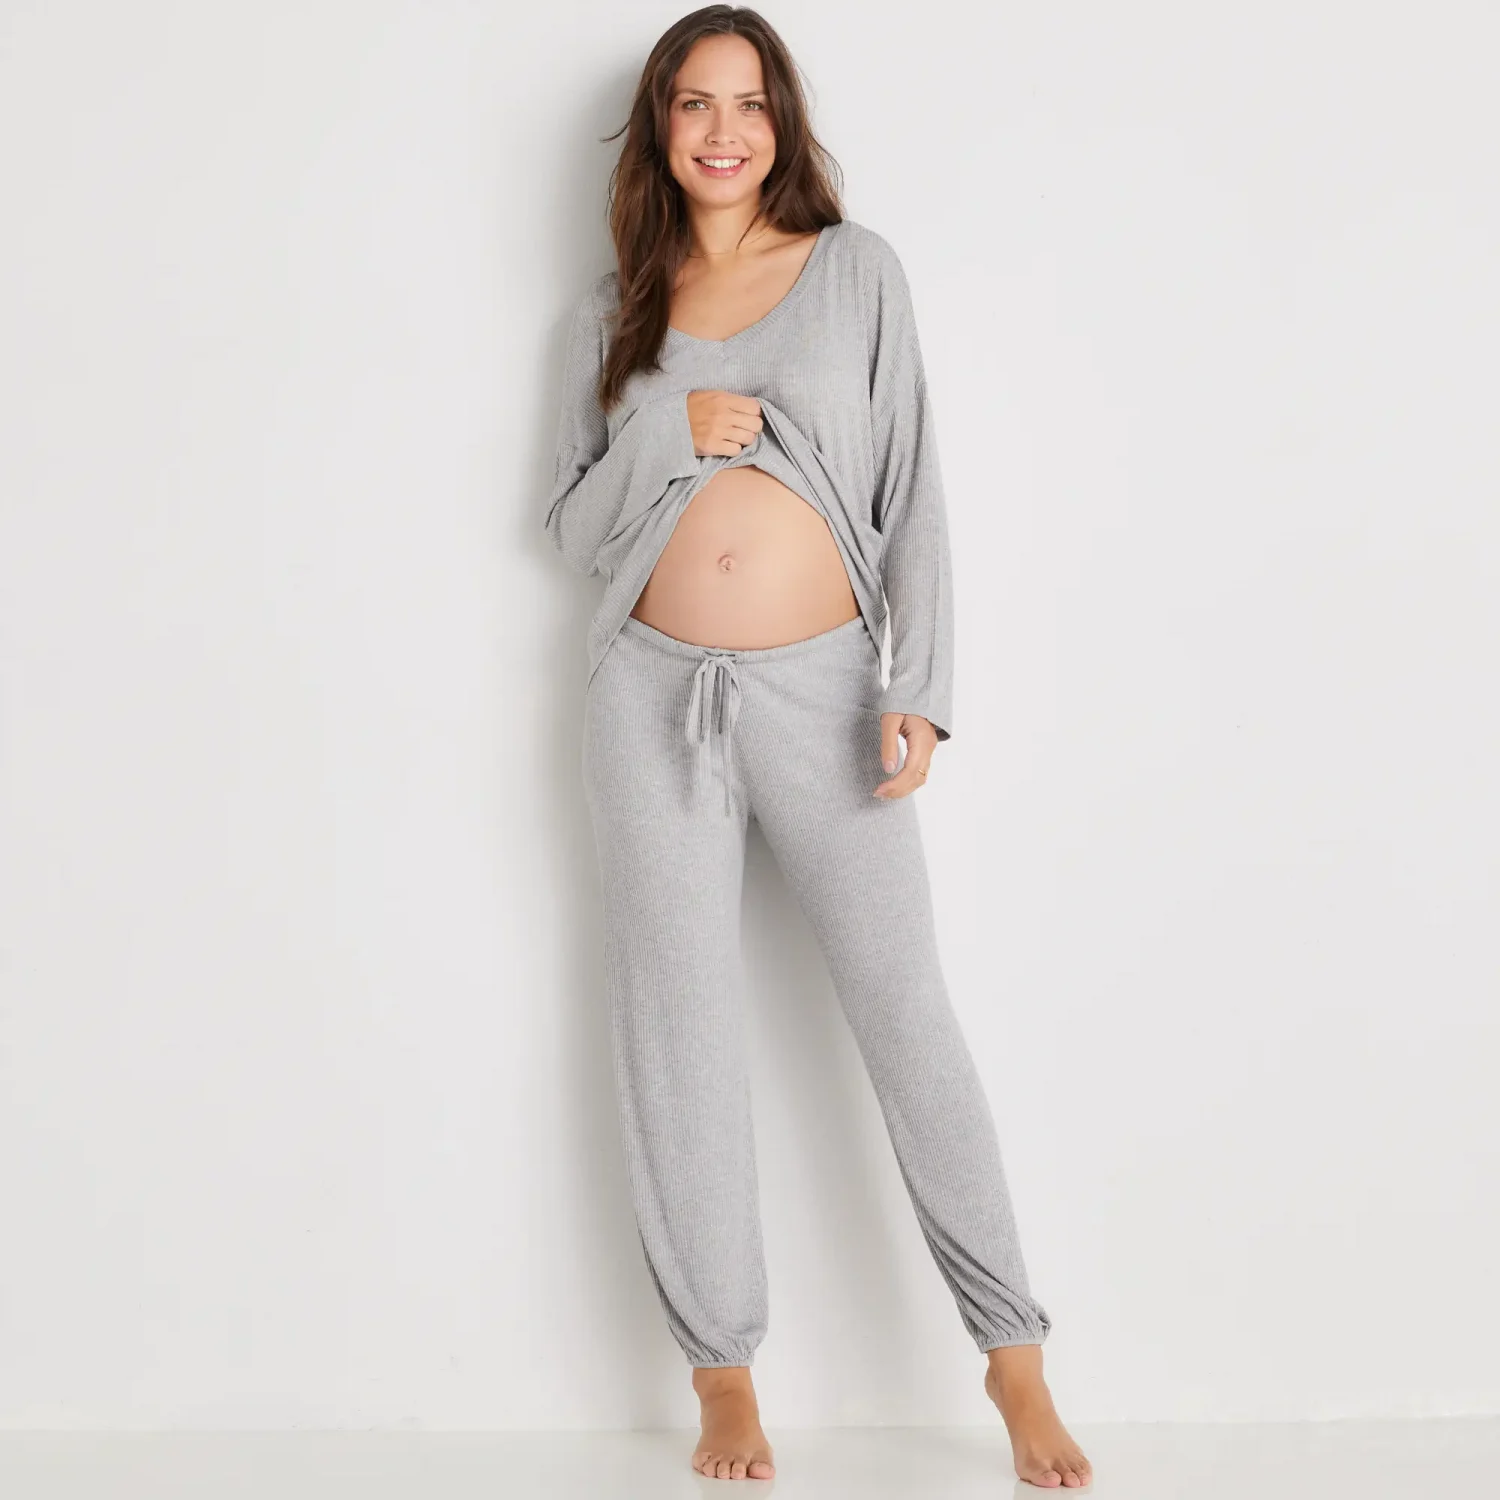 Eberjey brand contemporary and stylish maternity friendly loungewear soft pants